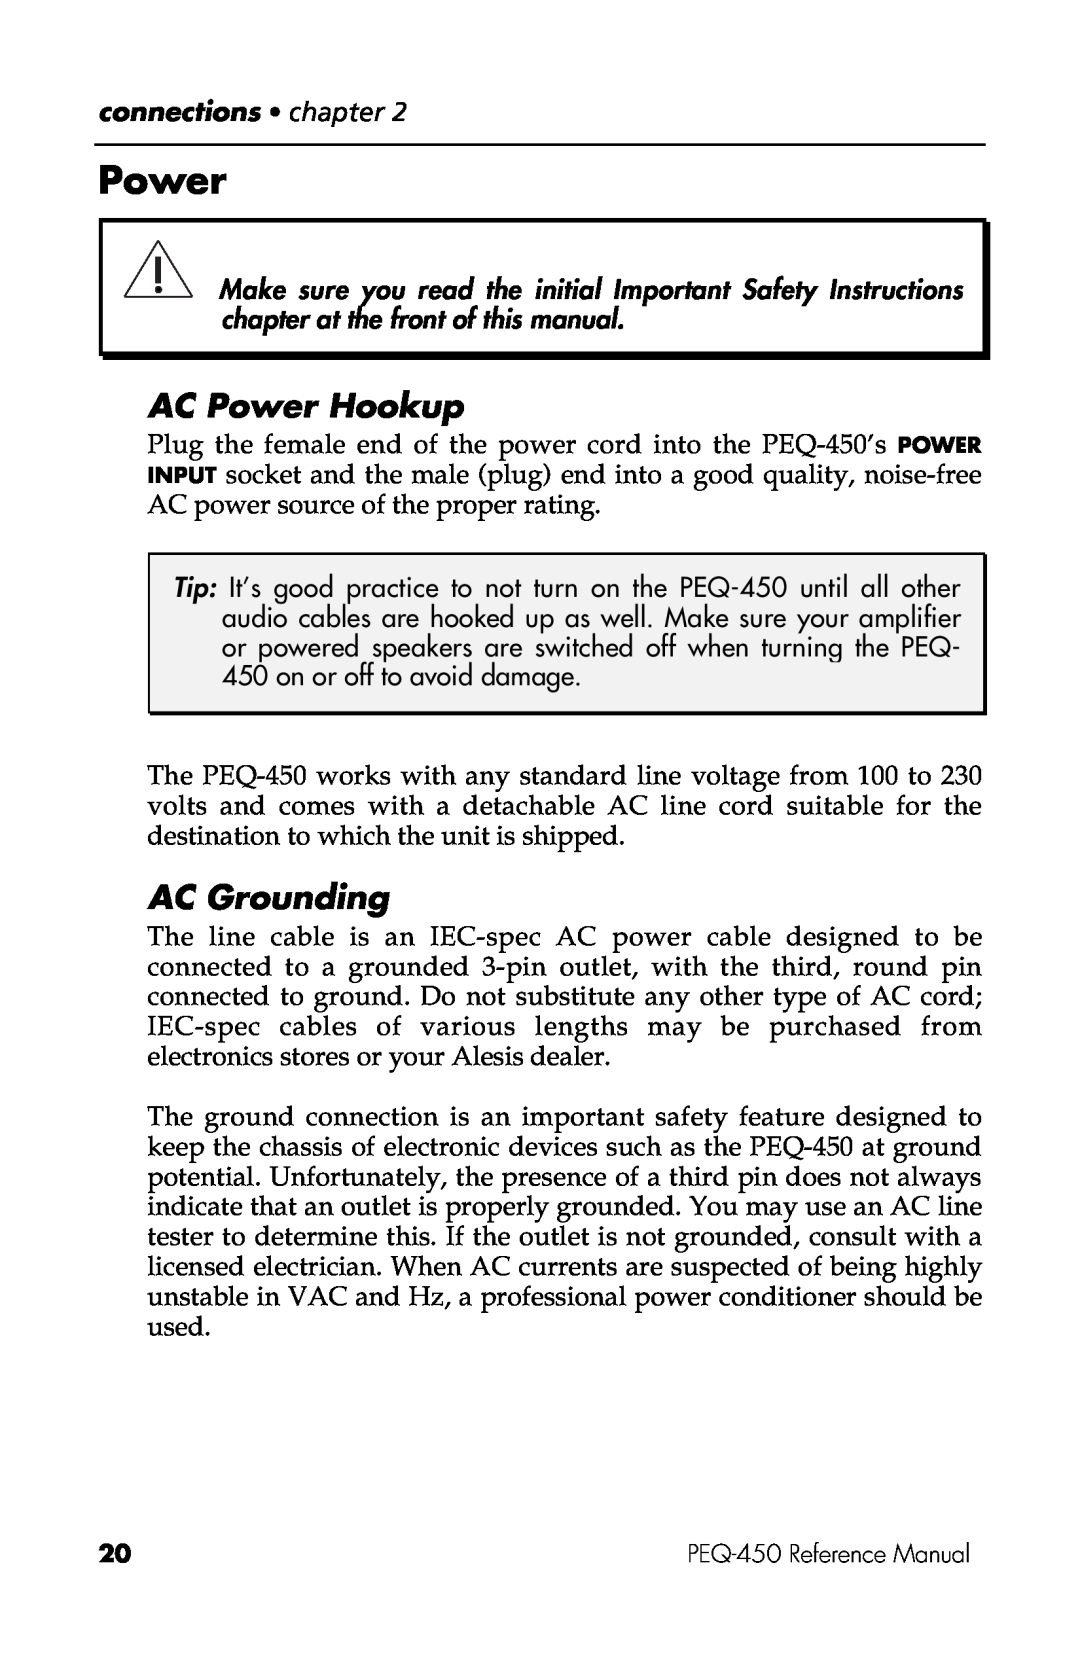 Alesis PEQ-450 manual AC Power Hookup, AC Grounding 